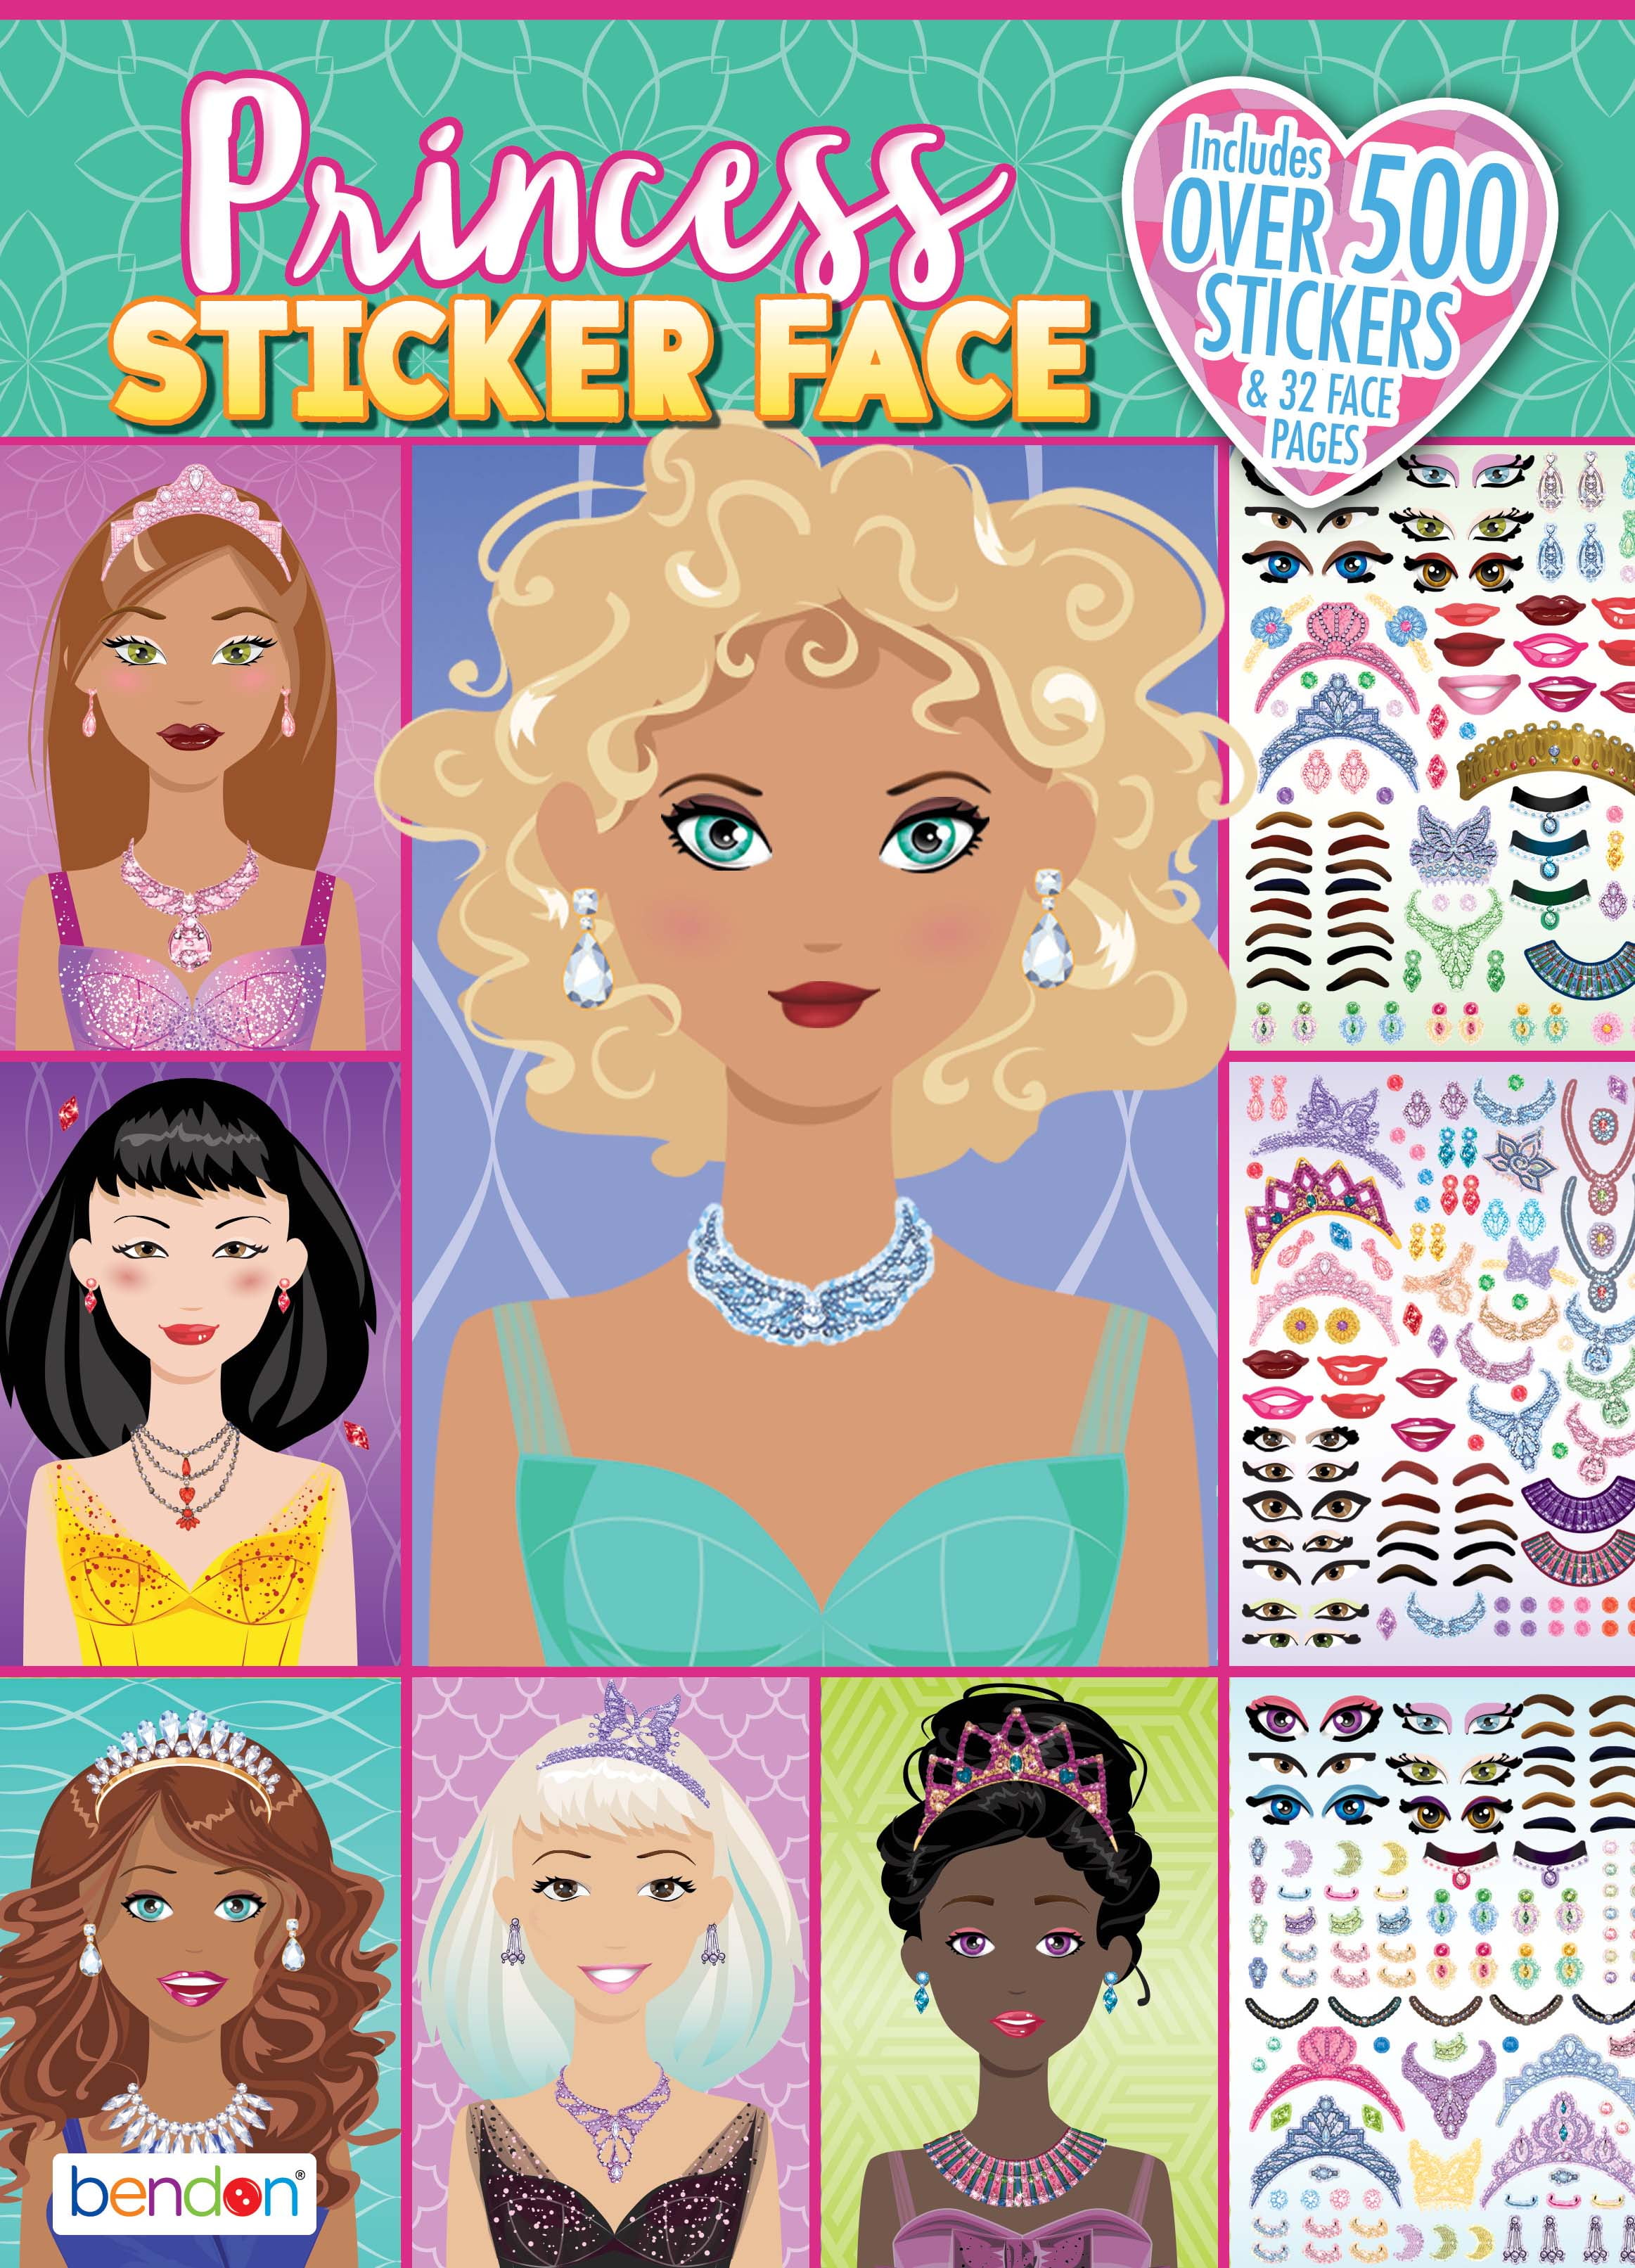 Sesame Street 43372 Bendon Create-a-Face Sticker Book